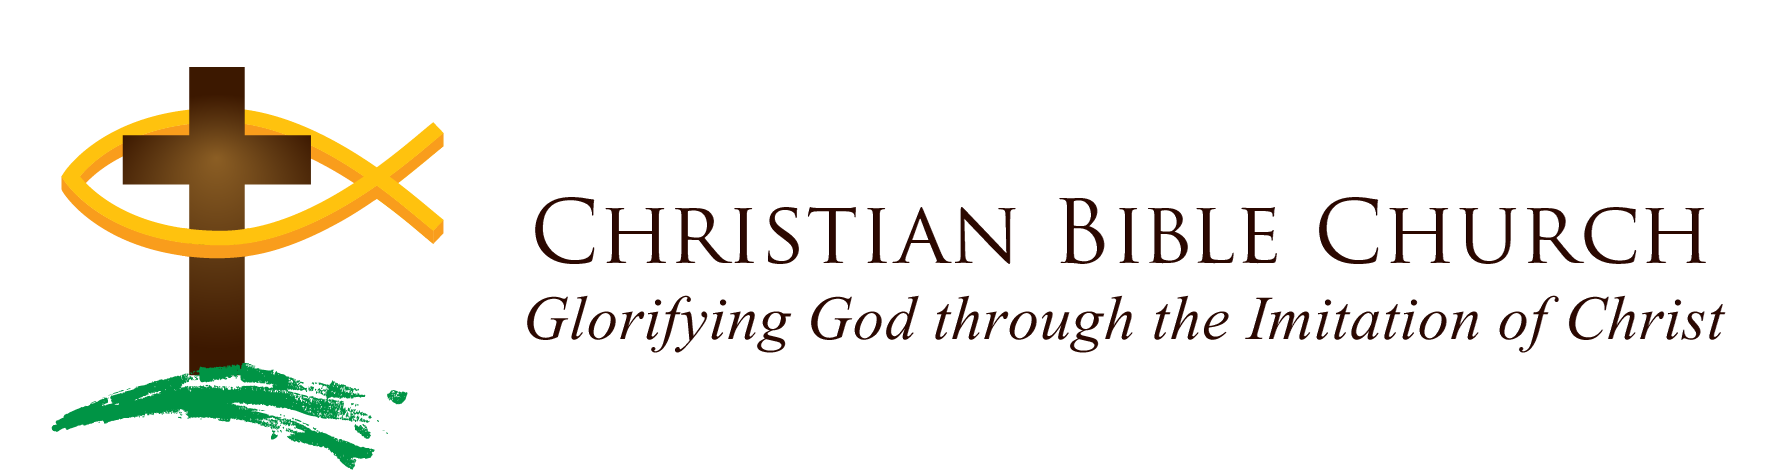 Christian Bible Church